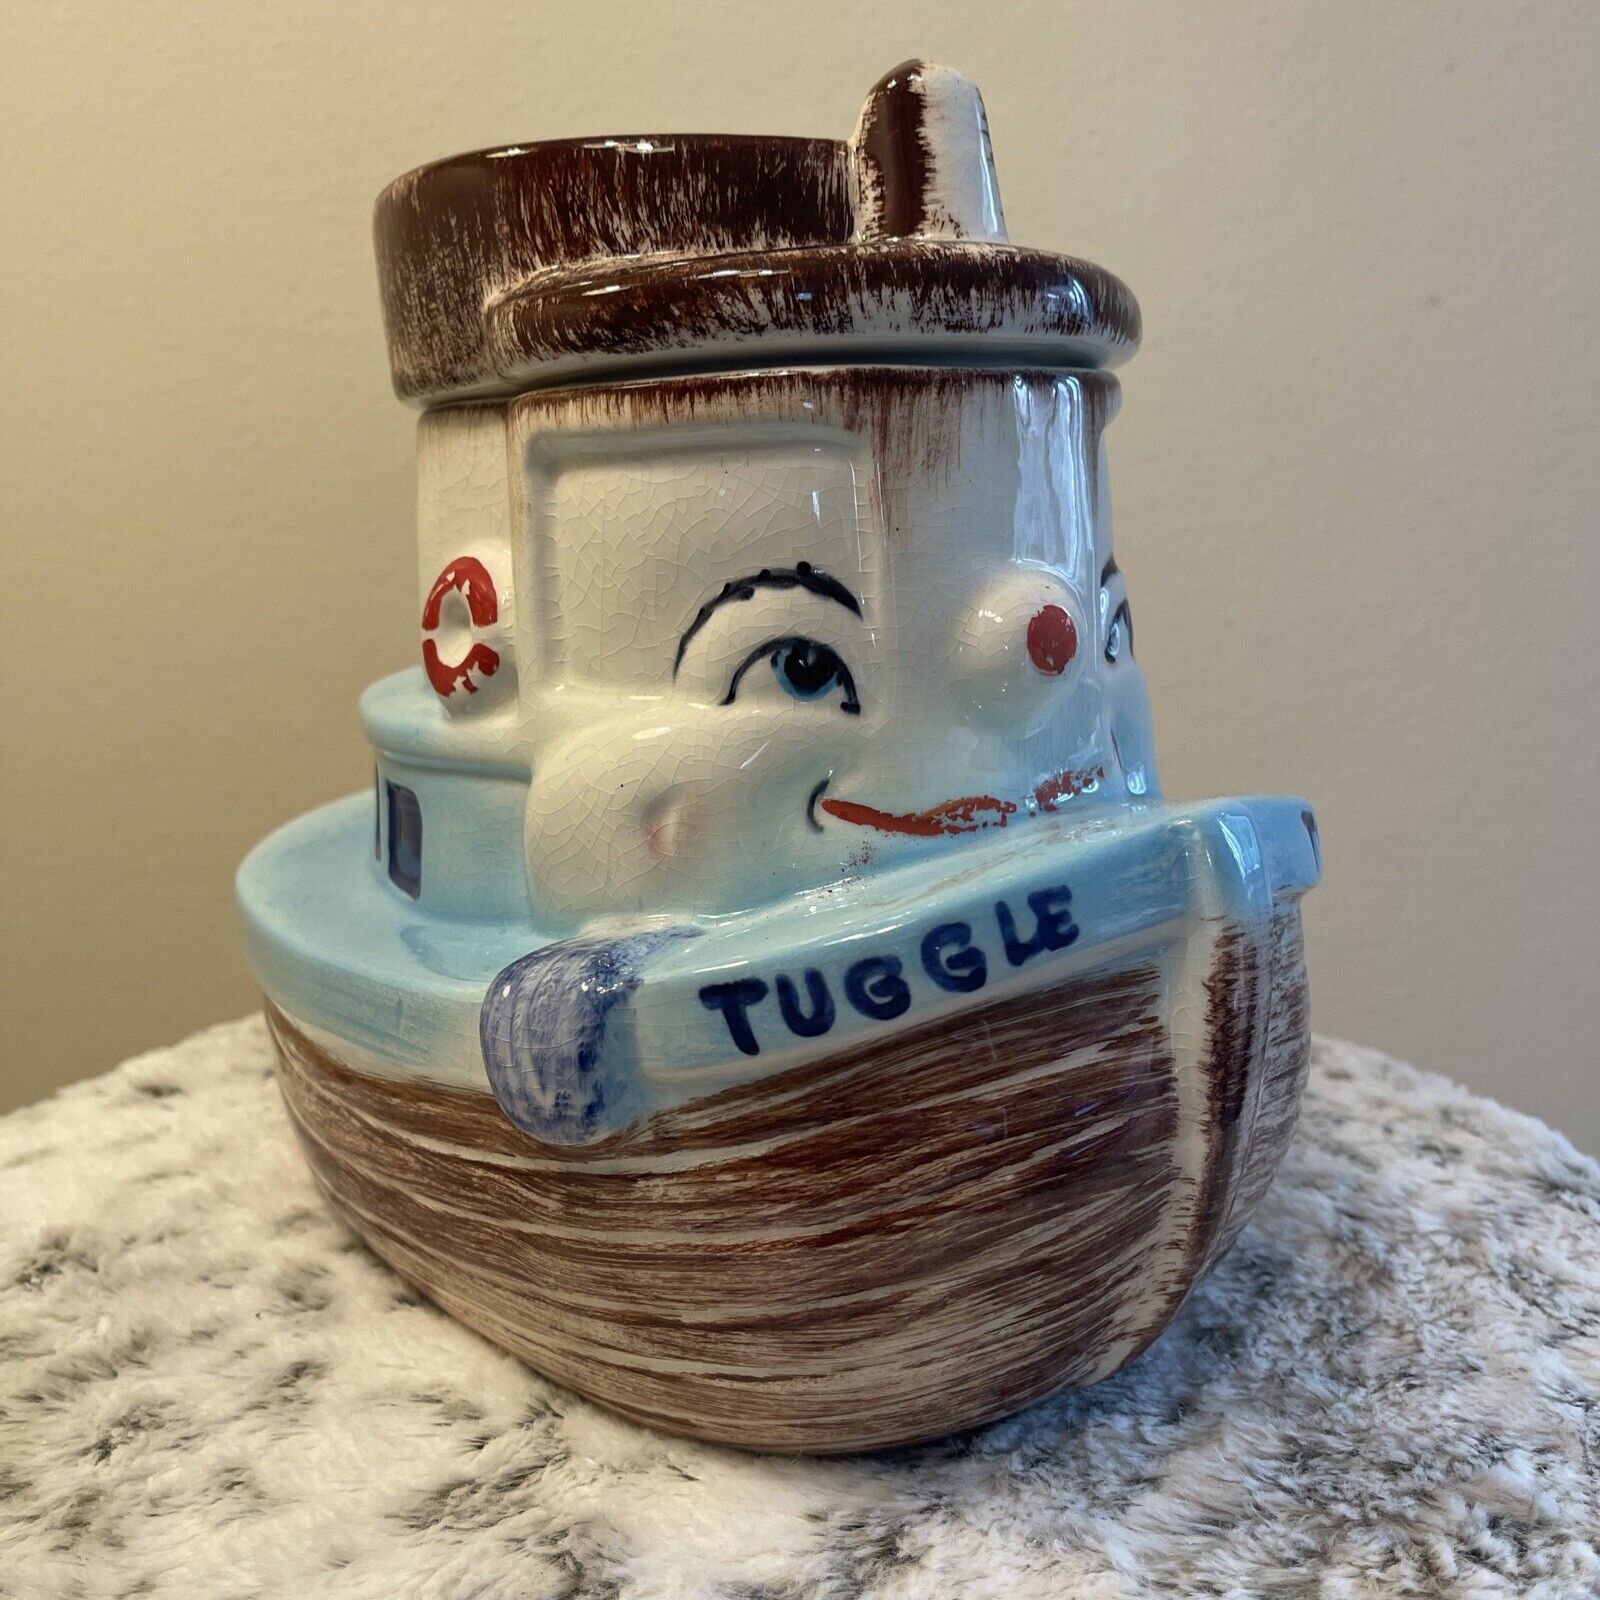 Vintage Tuggle the Tugboat Cookie Jar Sierra Vista California 1940s - 1950s